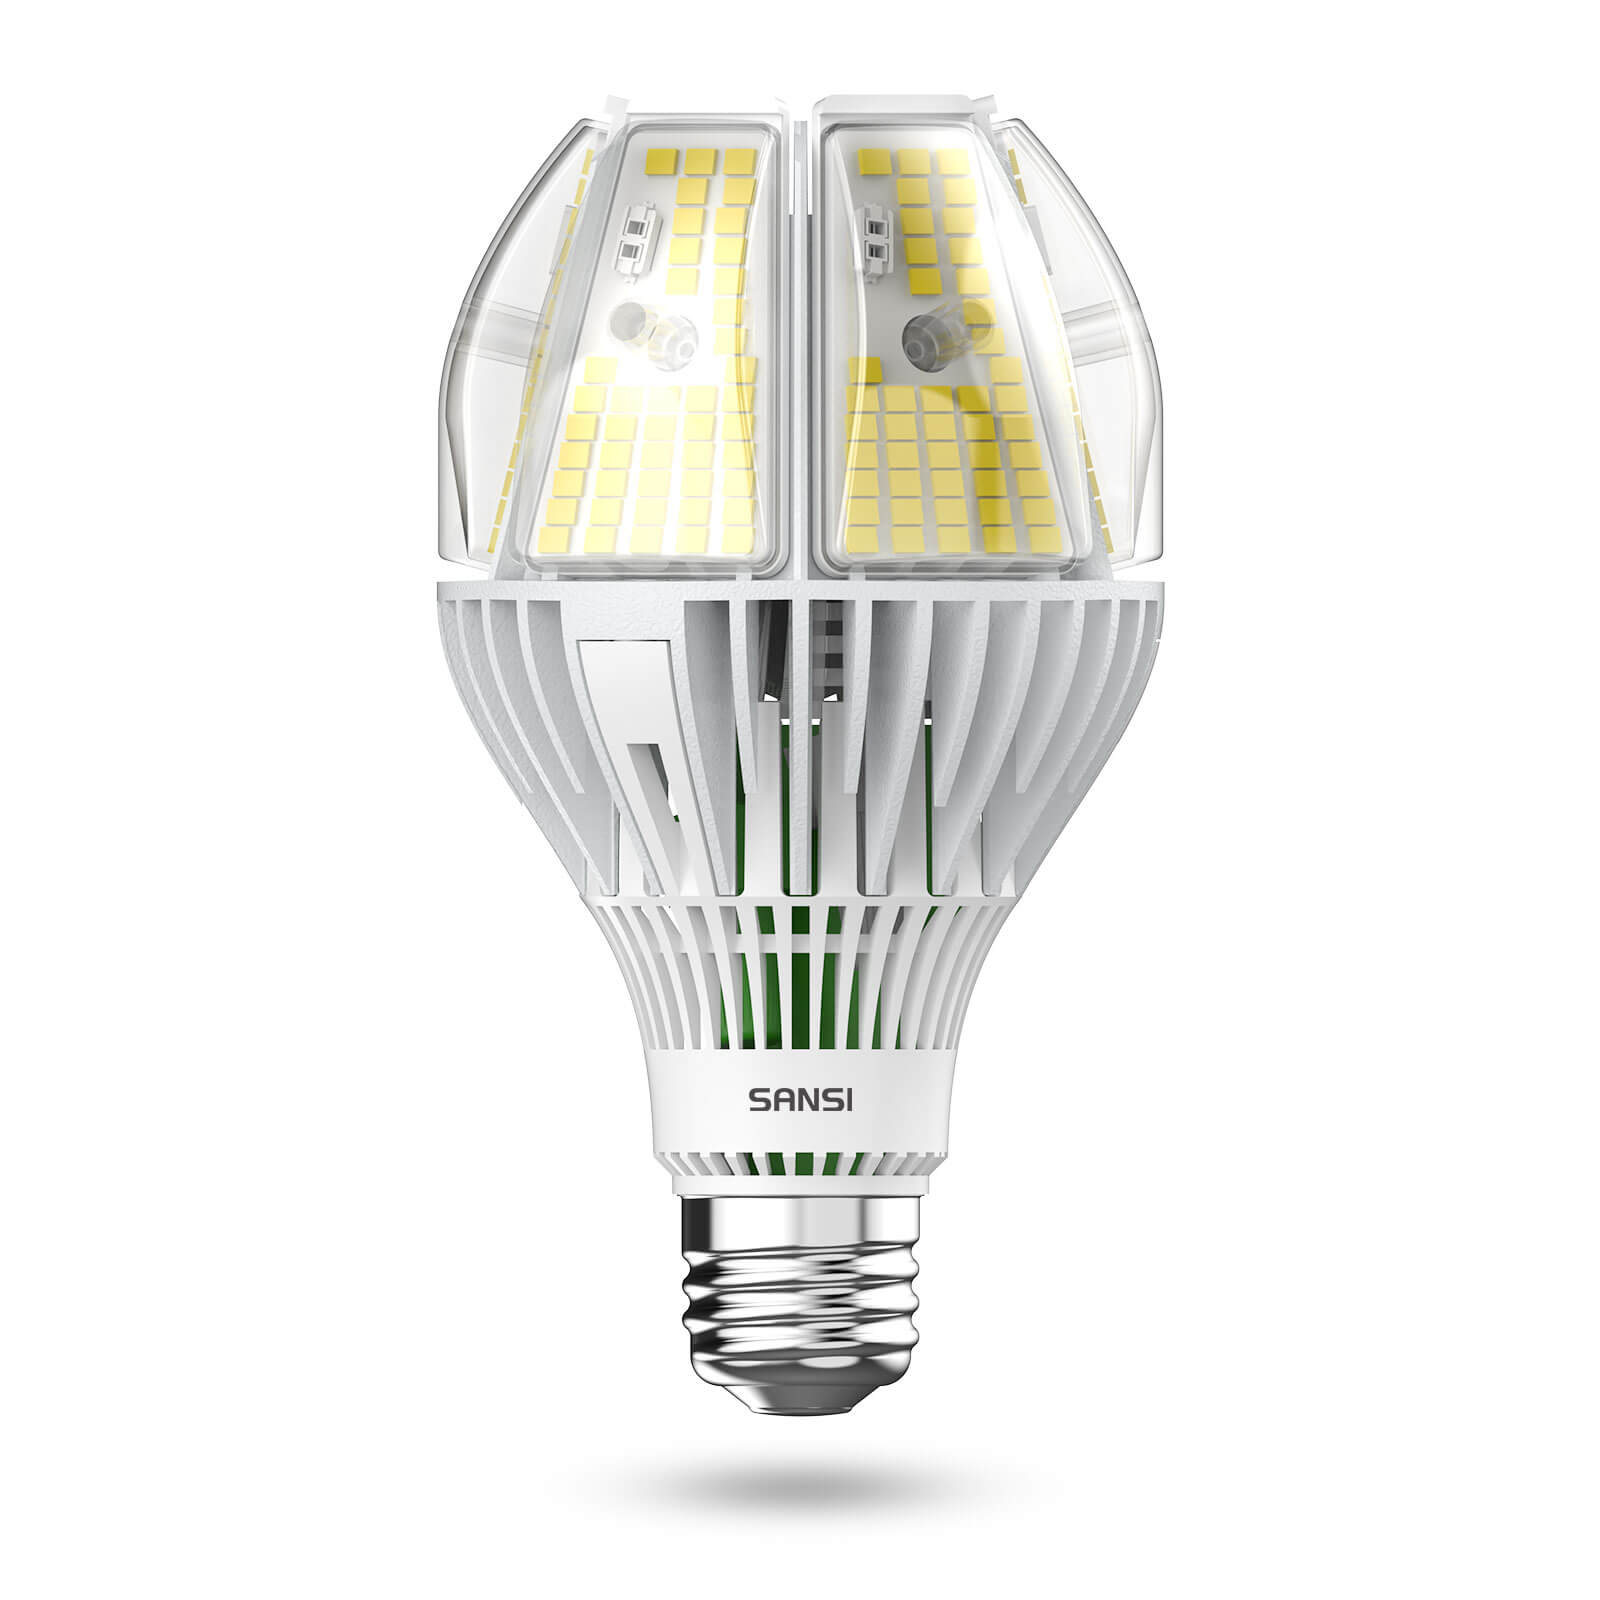 SANSI LED Refrigerator Light Bulb 45W Equivalent, Waterproof